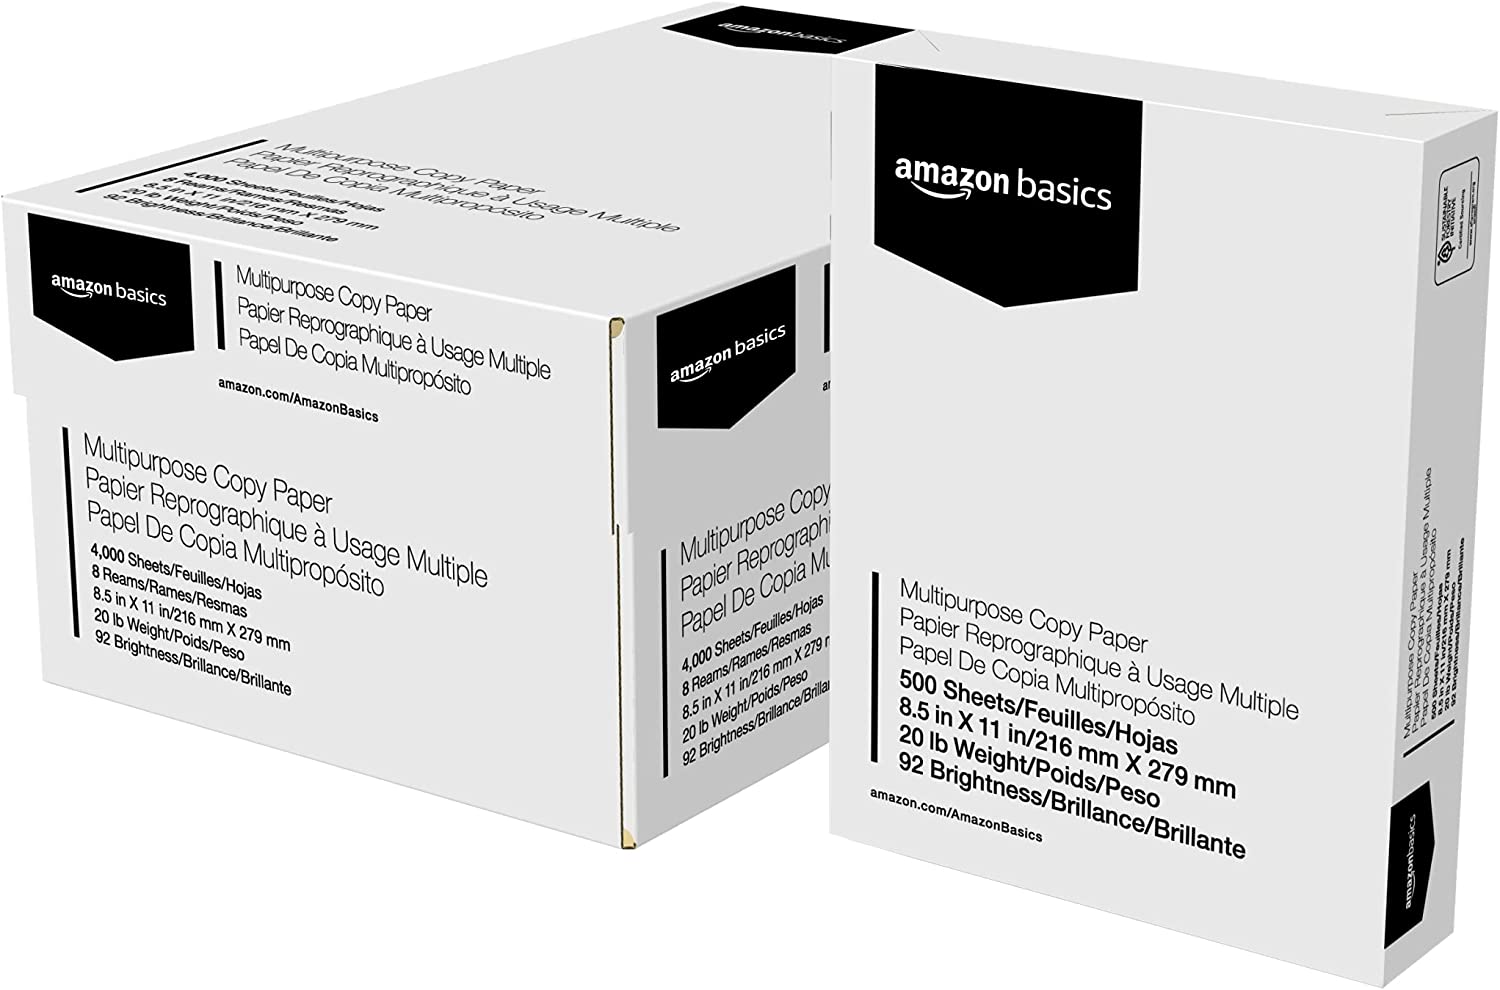 White, blank Amazon copy paper sized 8.5" x 11".